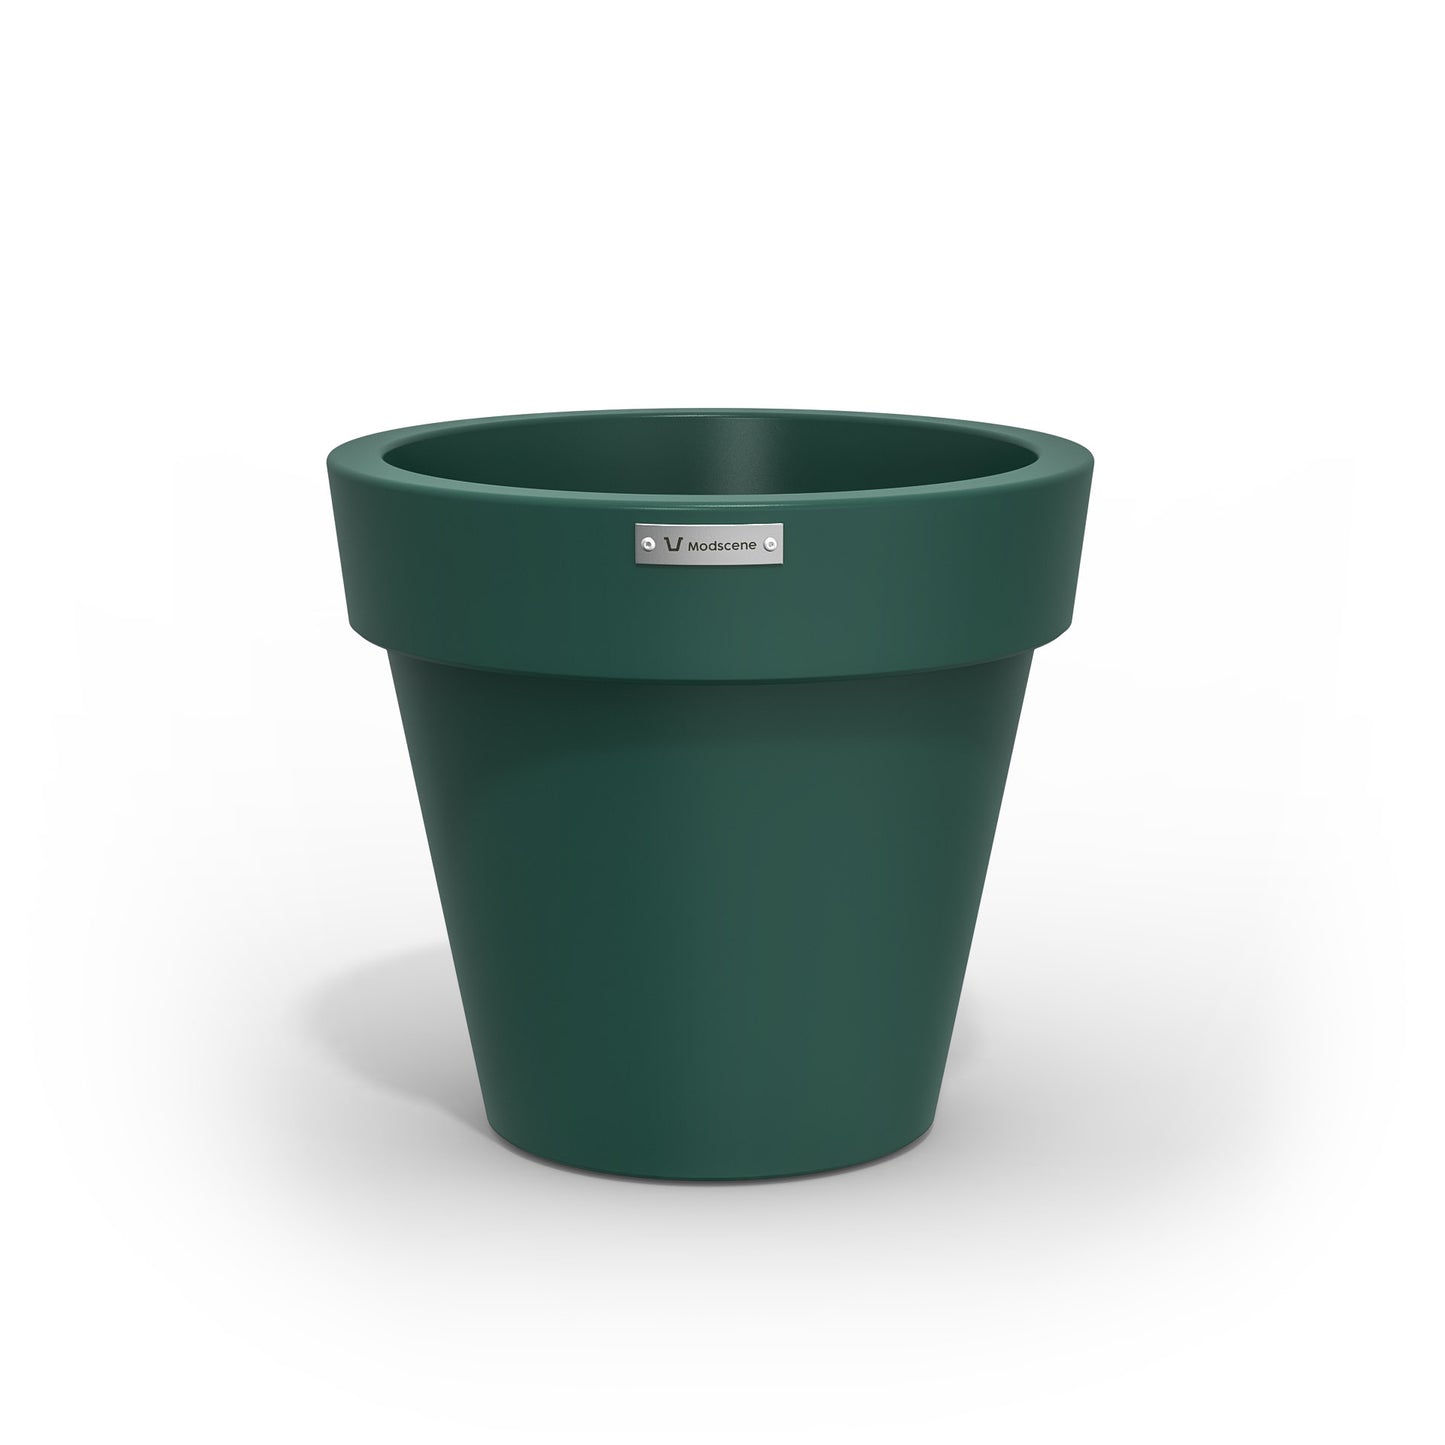 Small Modscene plastic planter pot in a emerald green colour. New Zealand made.